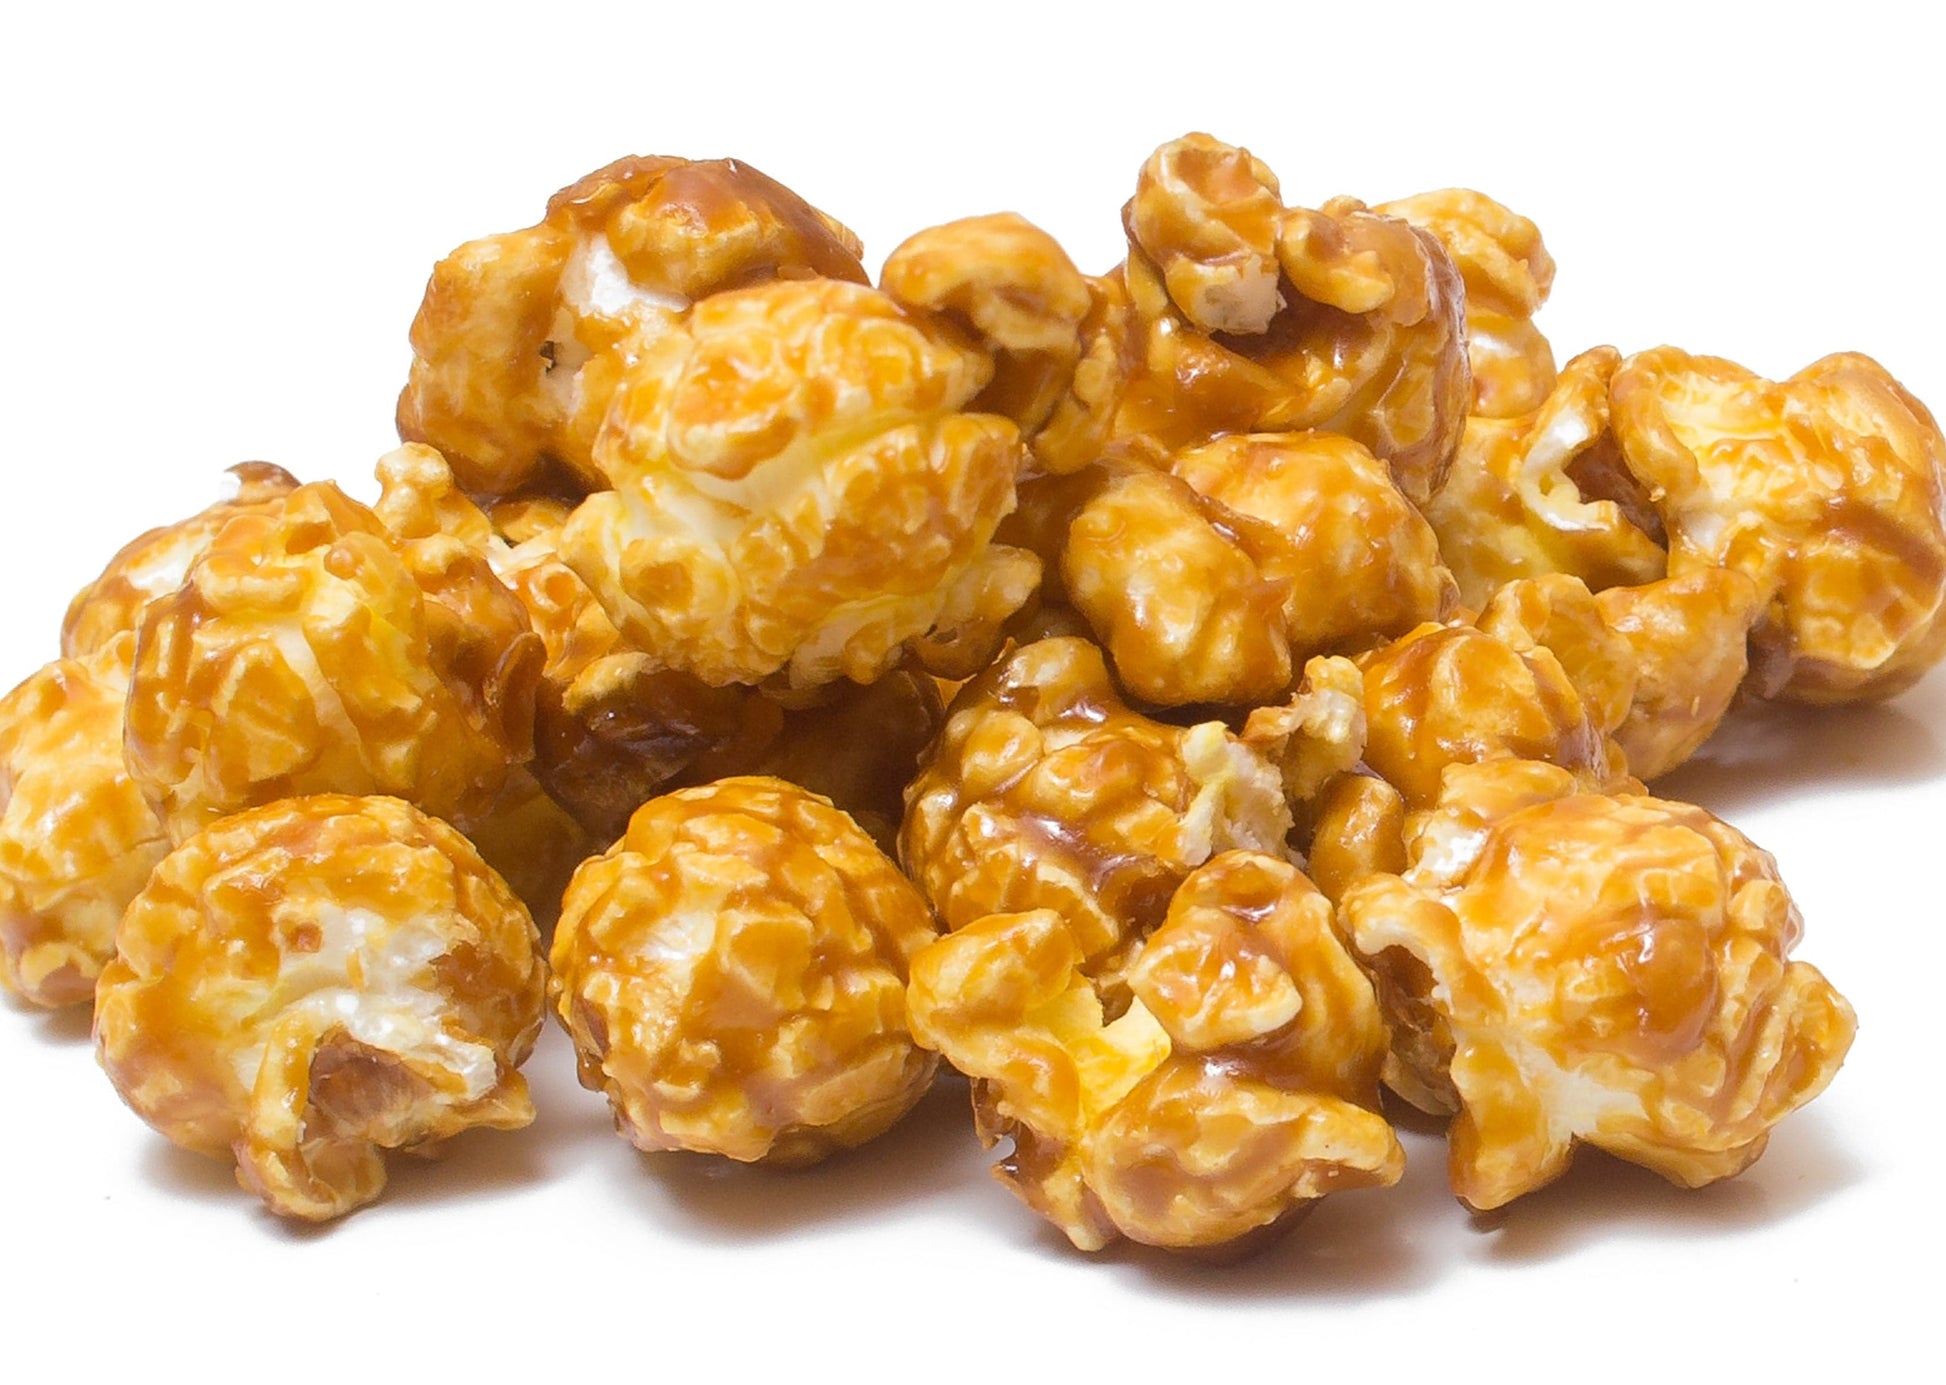 Creamy caramel popcorn is the best online fundraiser popcorn